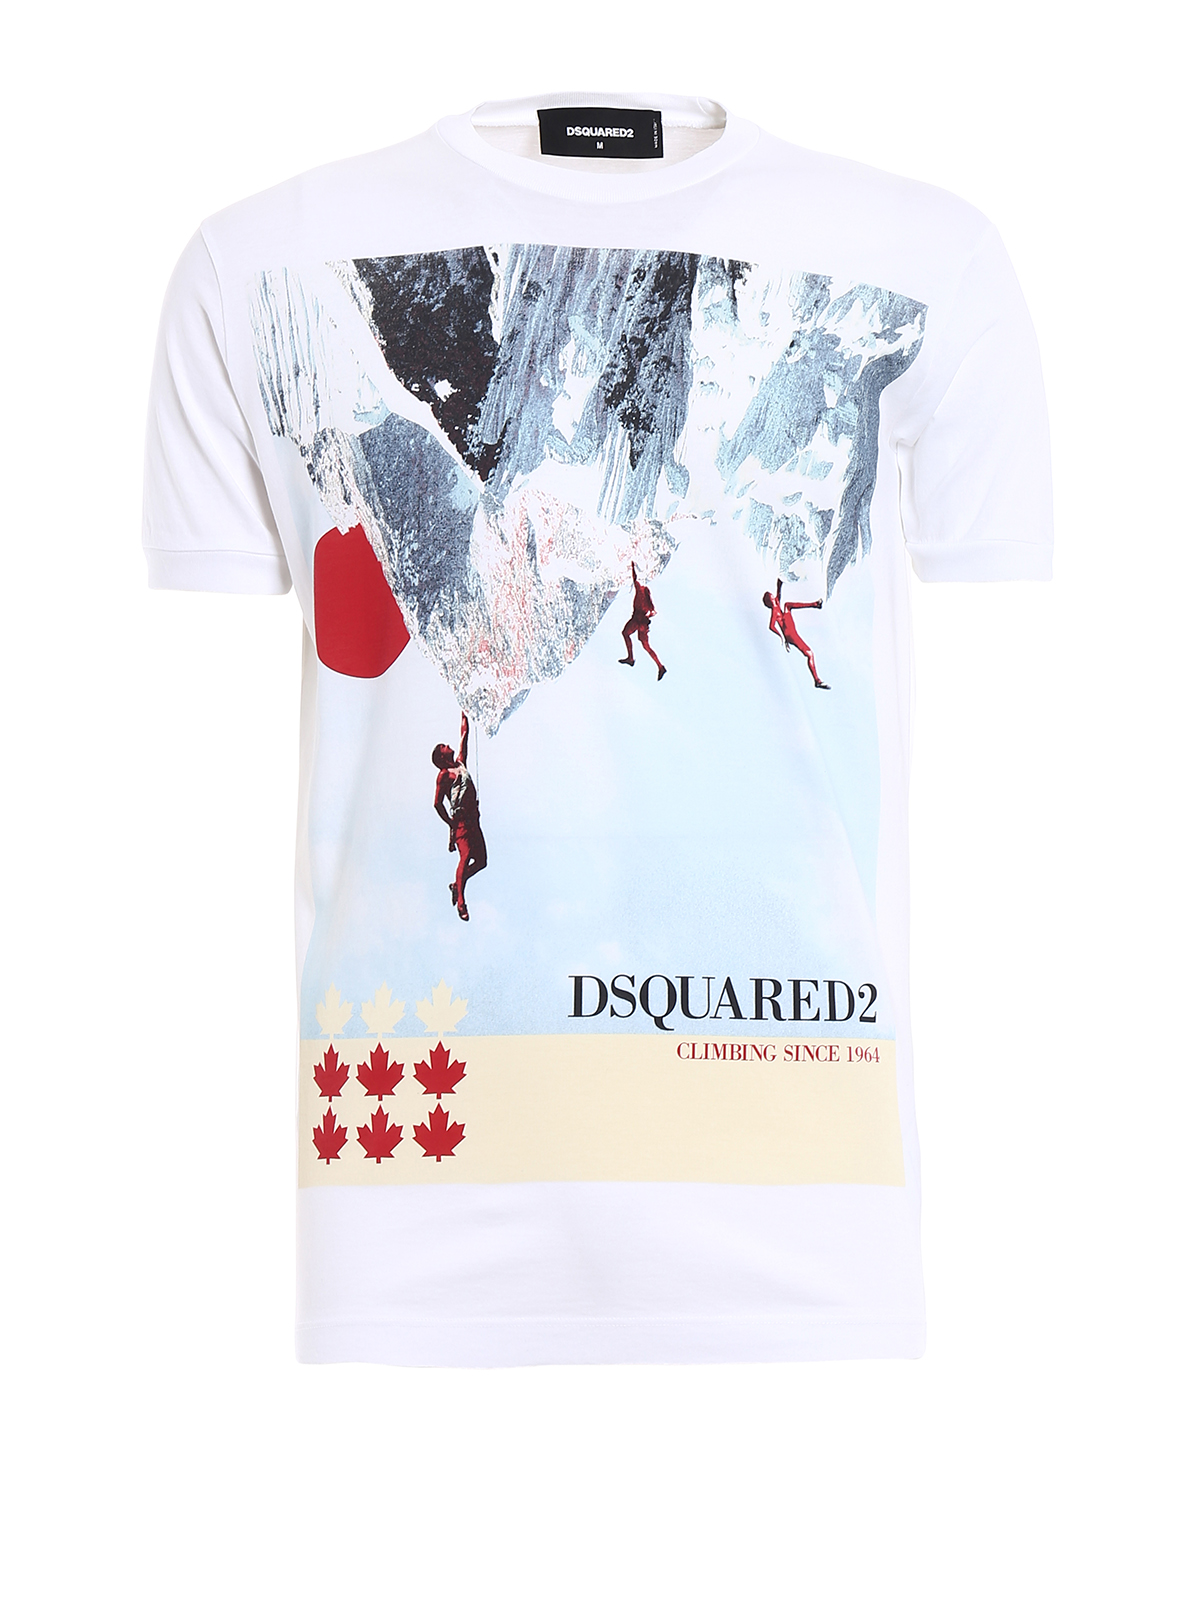 Dsquared2 - Climbing since 1964 T-shirt 